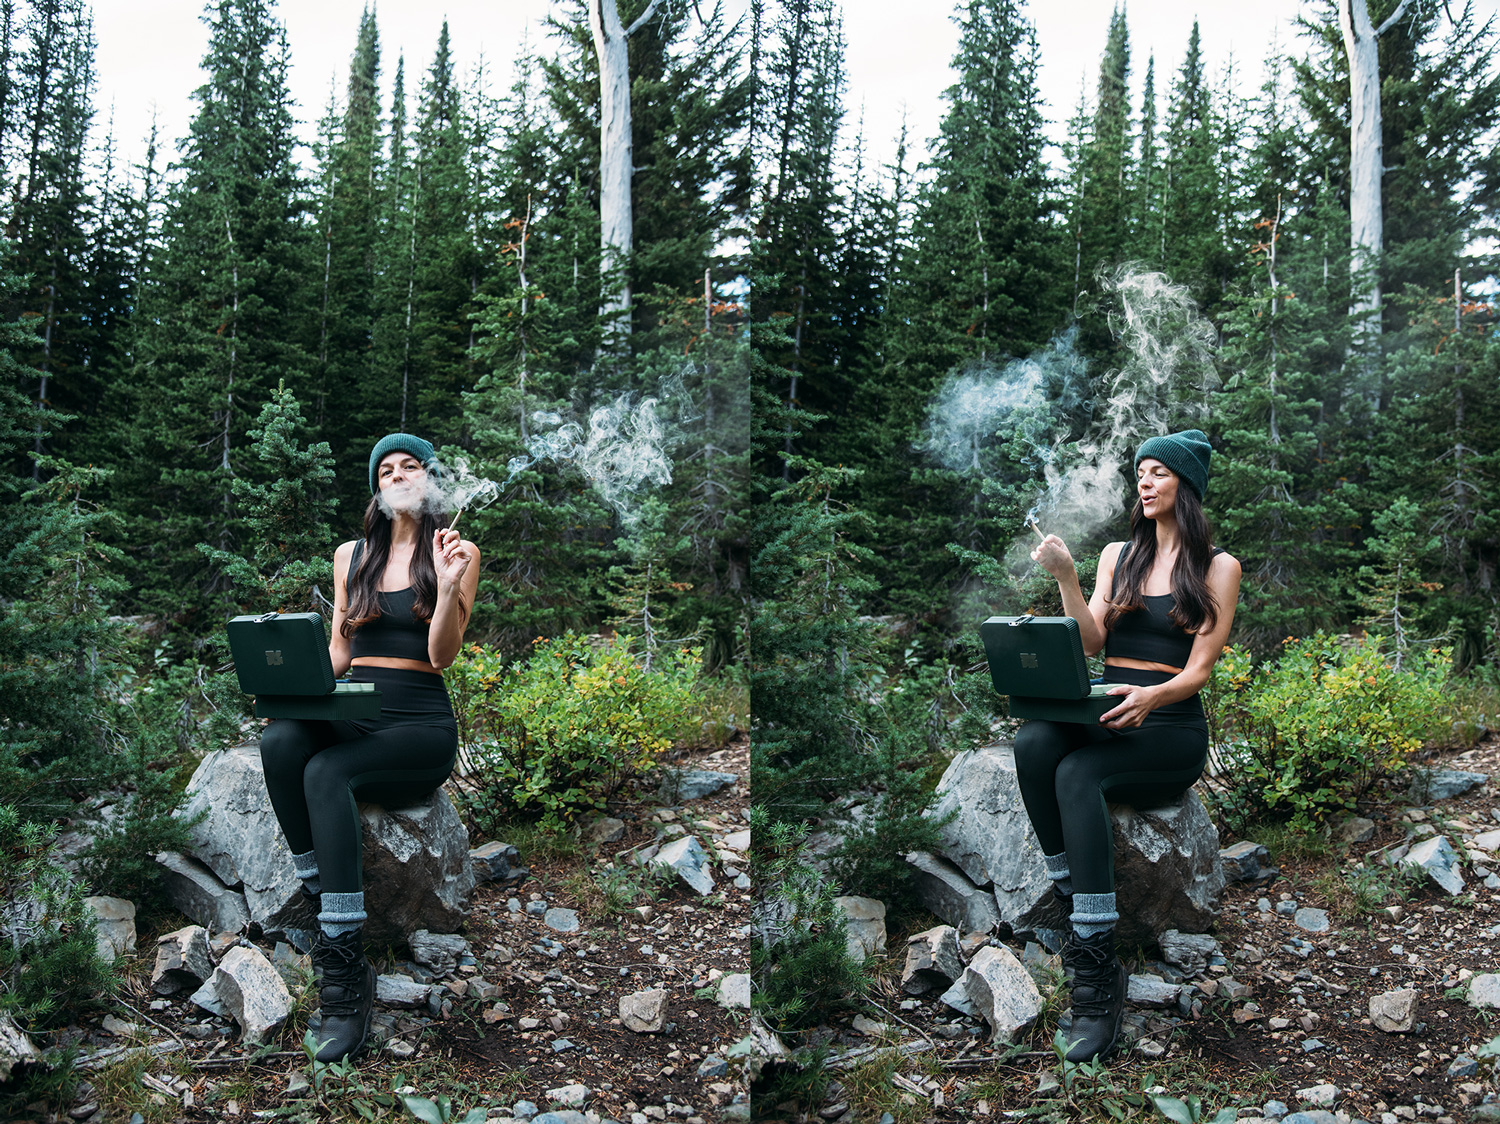 Hiking and cannabis